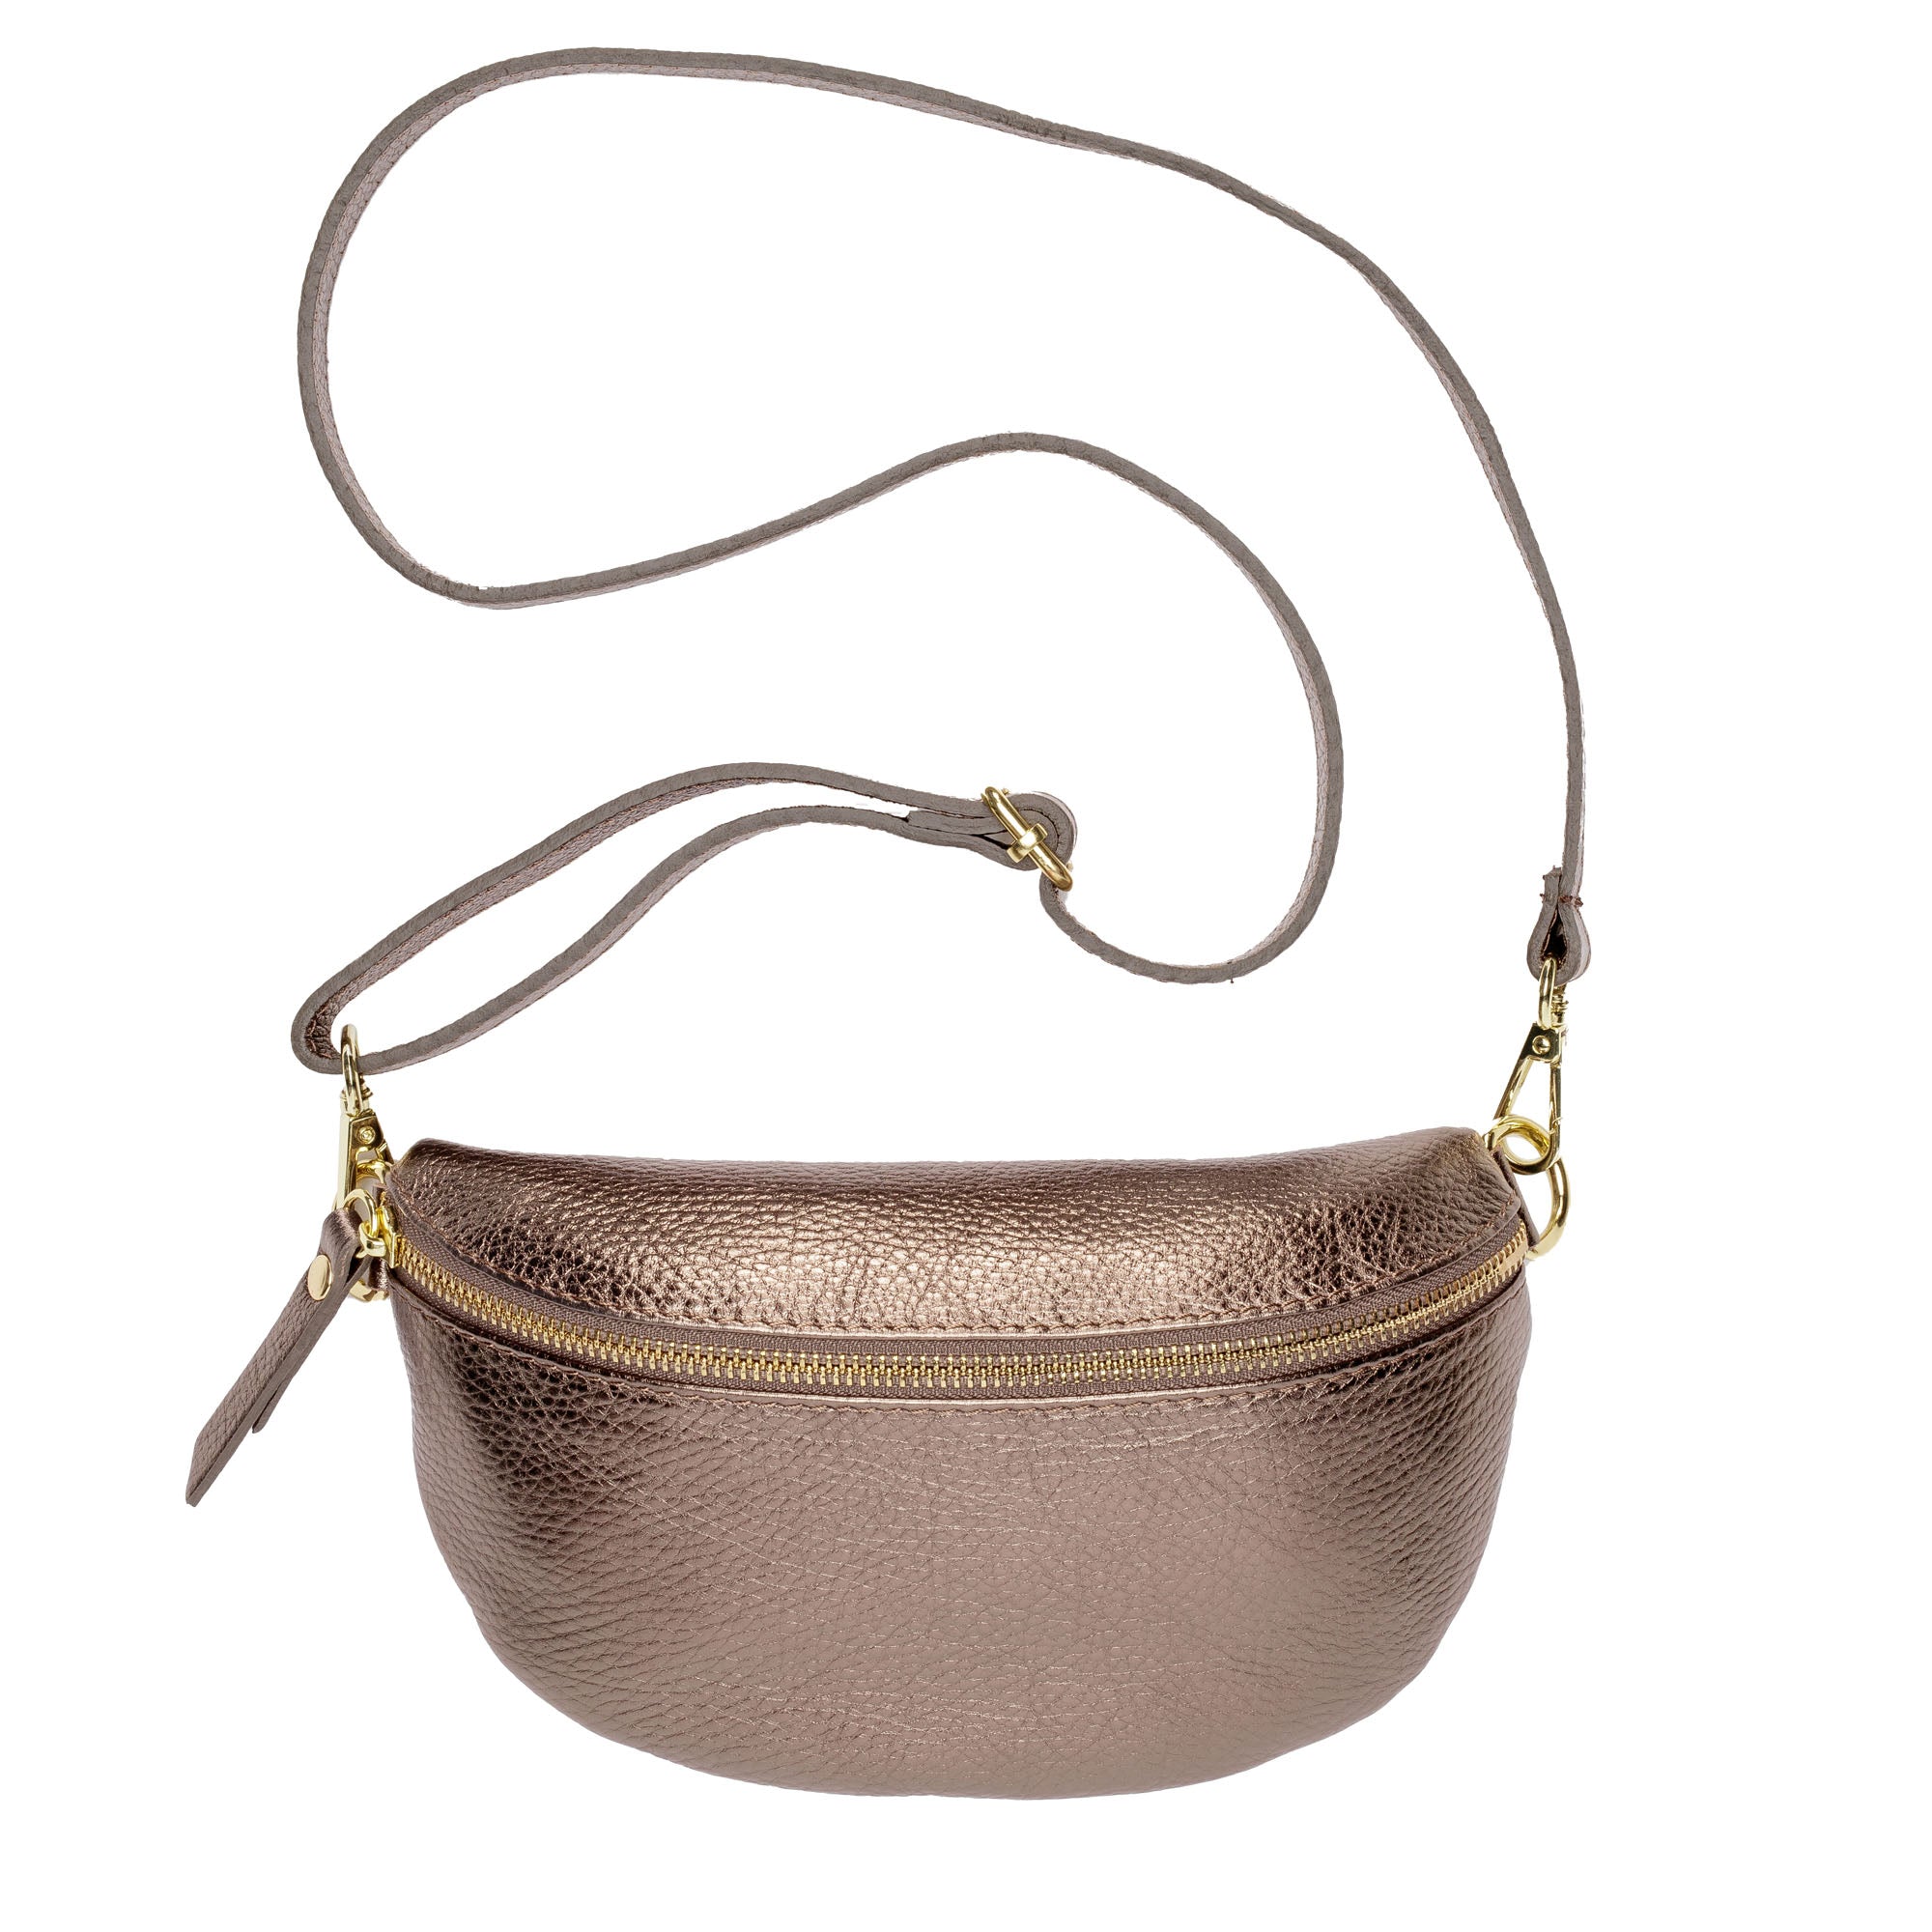 Sling Bag - Bronze with Black/Gold/White Strap